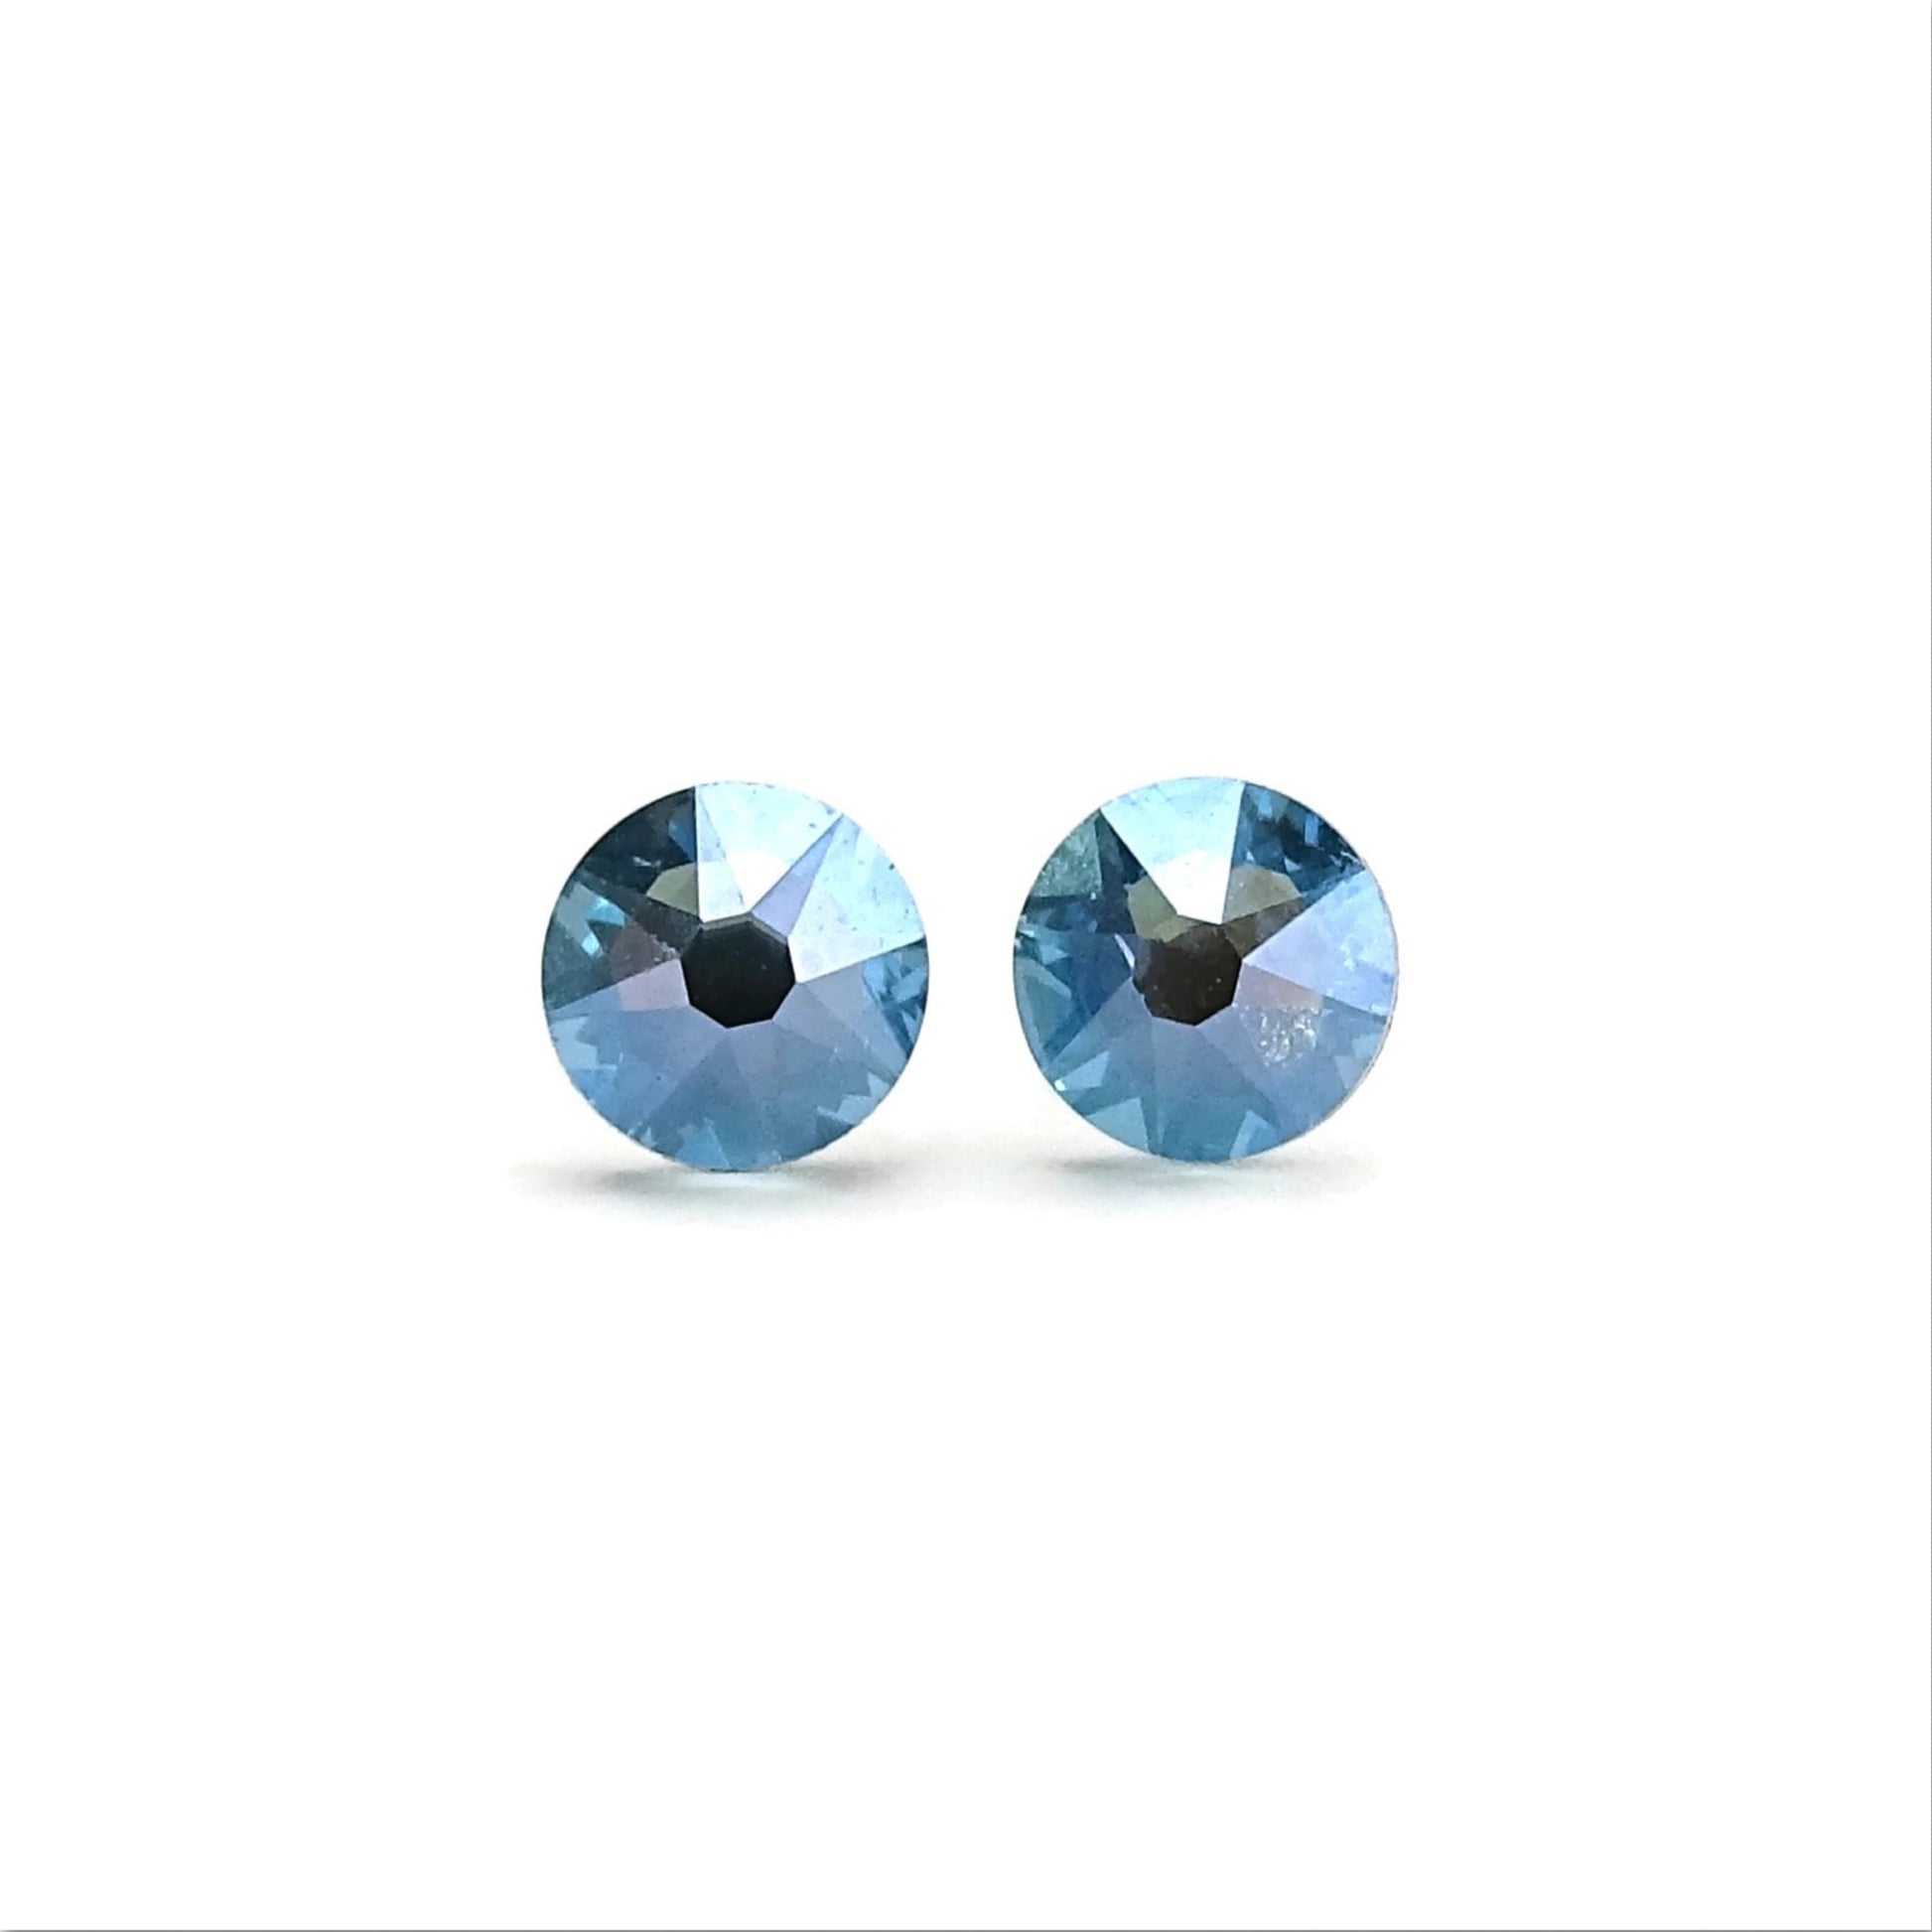 Aquamarine Moonlight Titanium Stud Earrings for Sensitive Ears